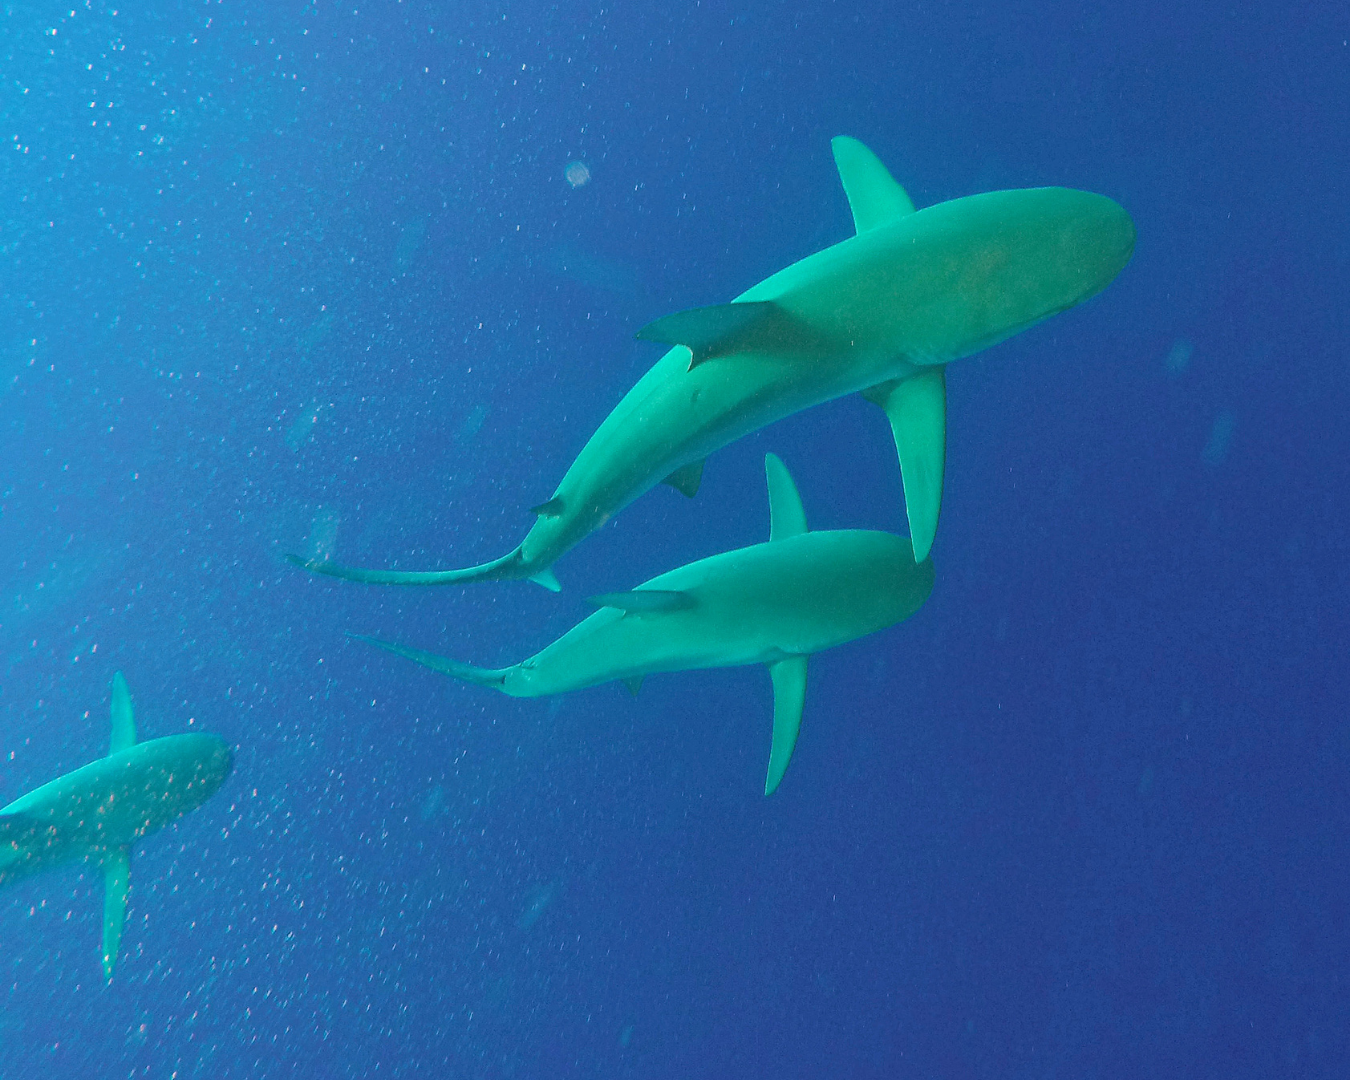 three sharks glide through the ocean with deep blue water beneath them